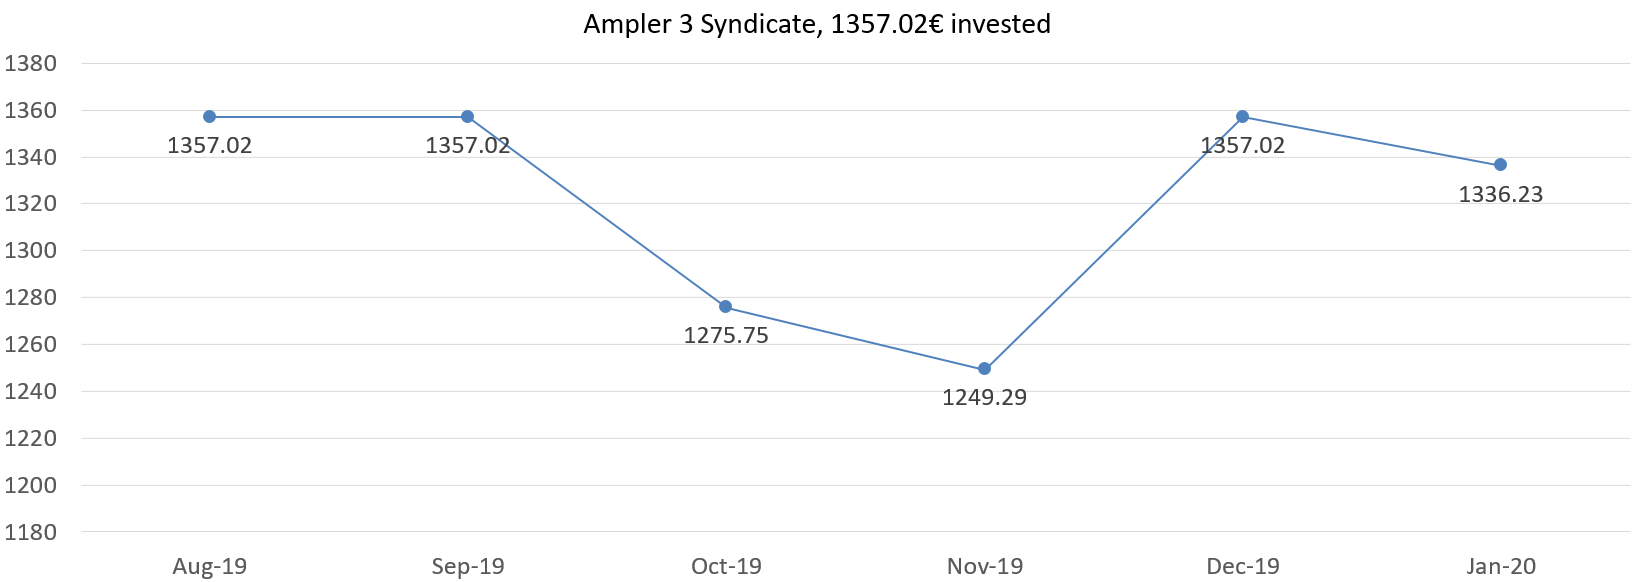 Ampler 3 Syndicate, 1357,02 euros invested, january 2020 portfolio